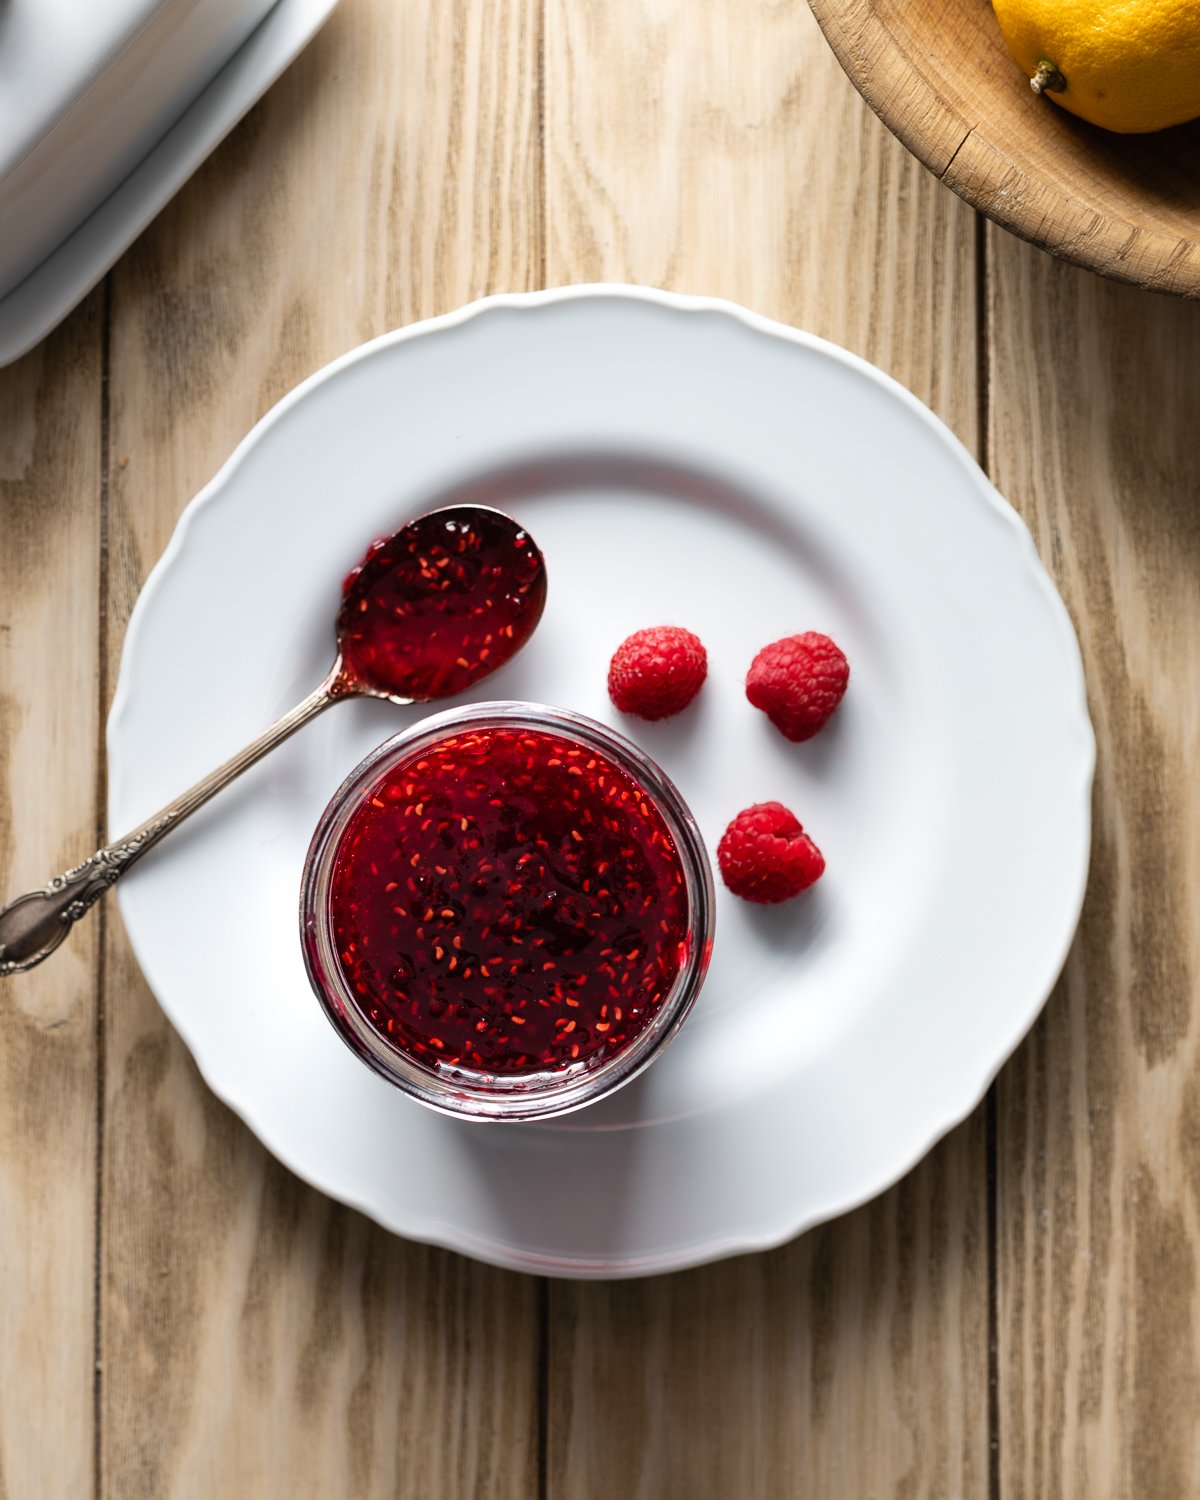 raspberry preserves in a jar on a plate with raspberries.